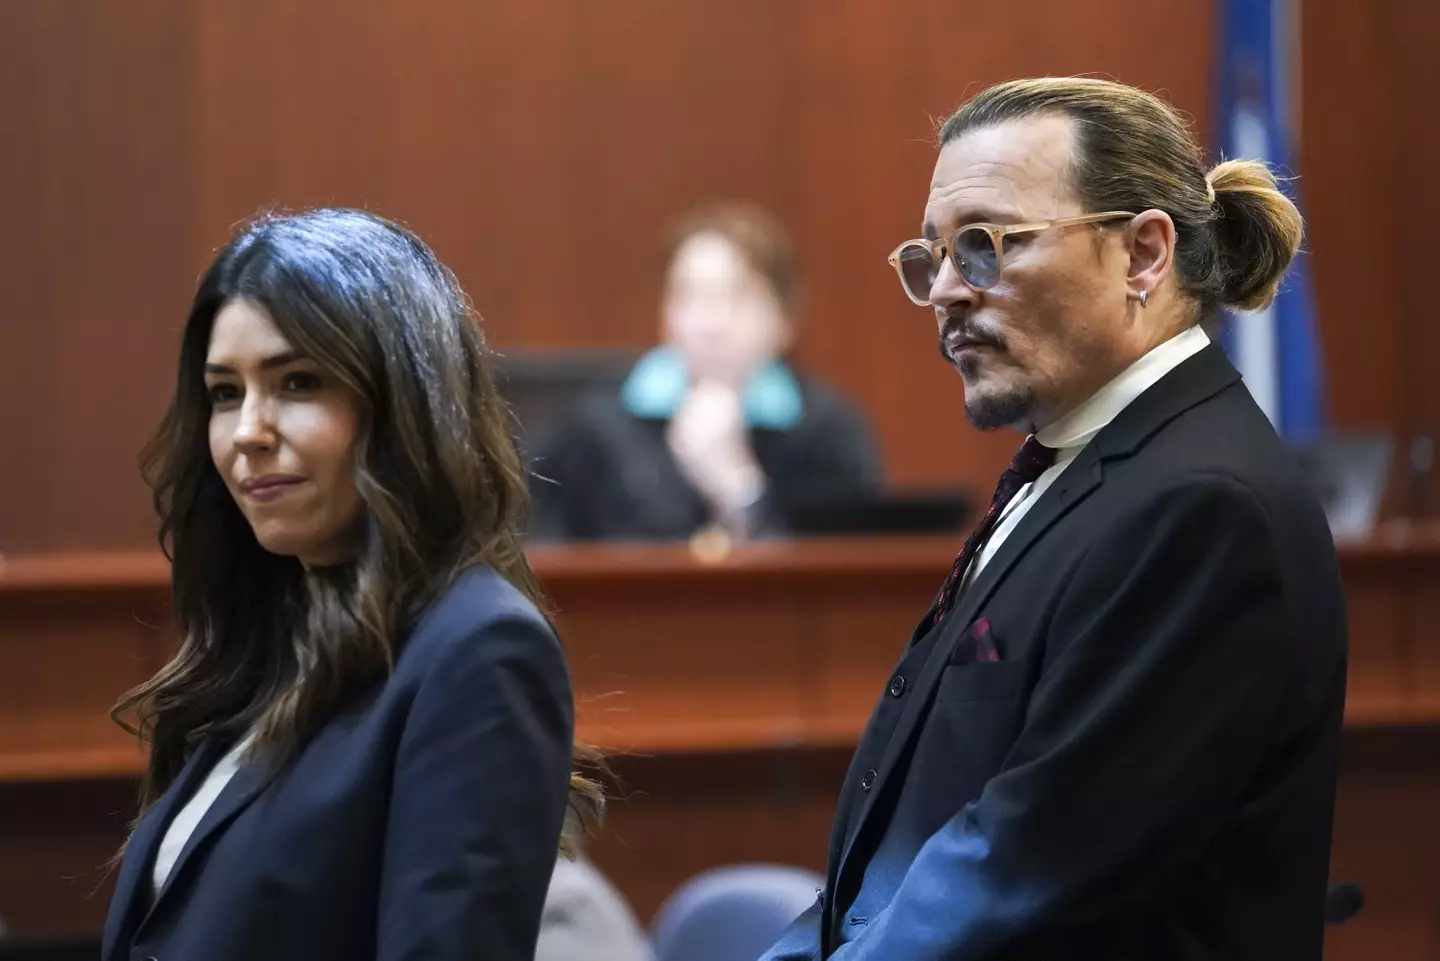 Camille Vasquez with her client Johnny Depp.